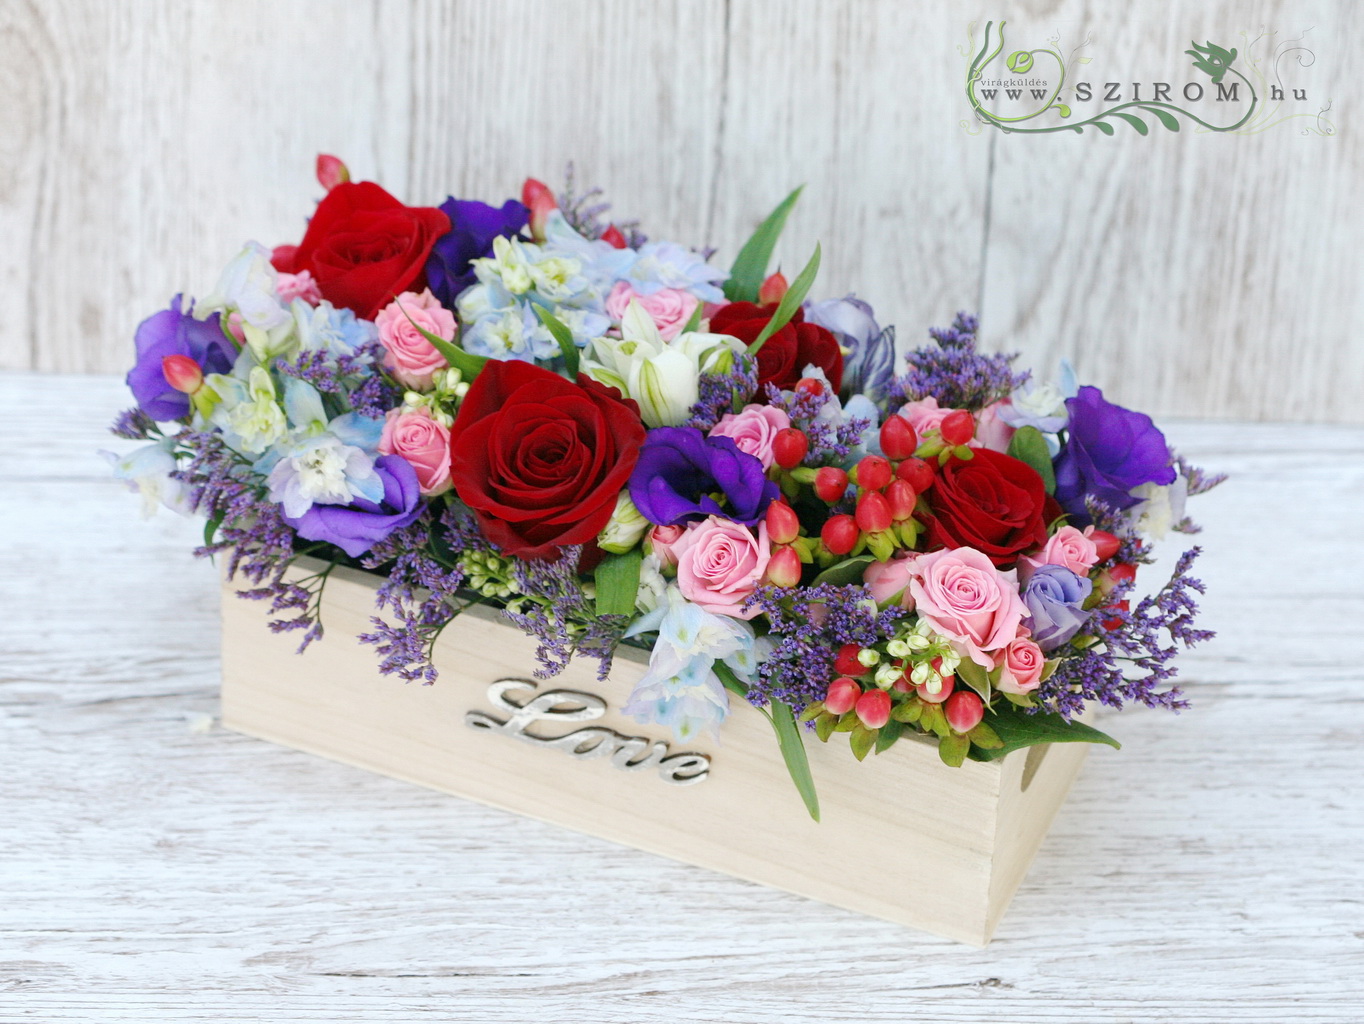 flower delivery Budapest - Flower arrangement in a wood box (rose, delphinium, spray rose, hypericum berries, blue, red), wedding